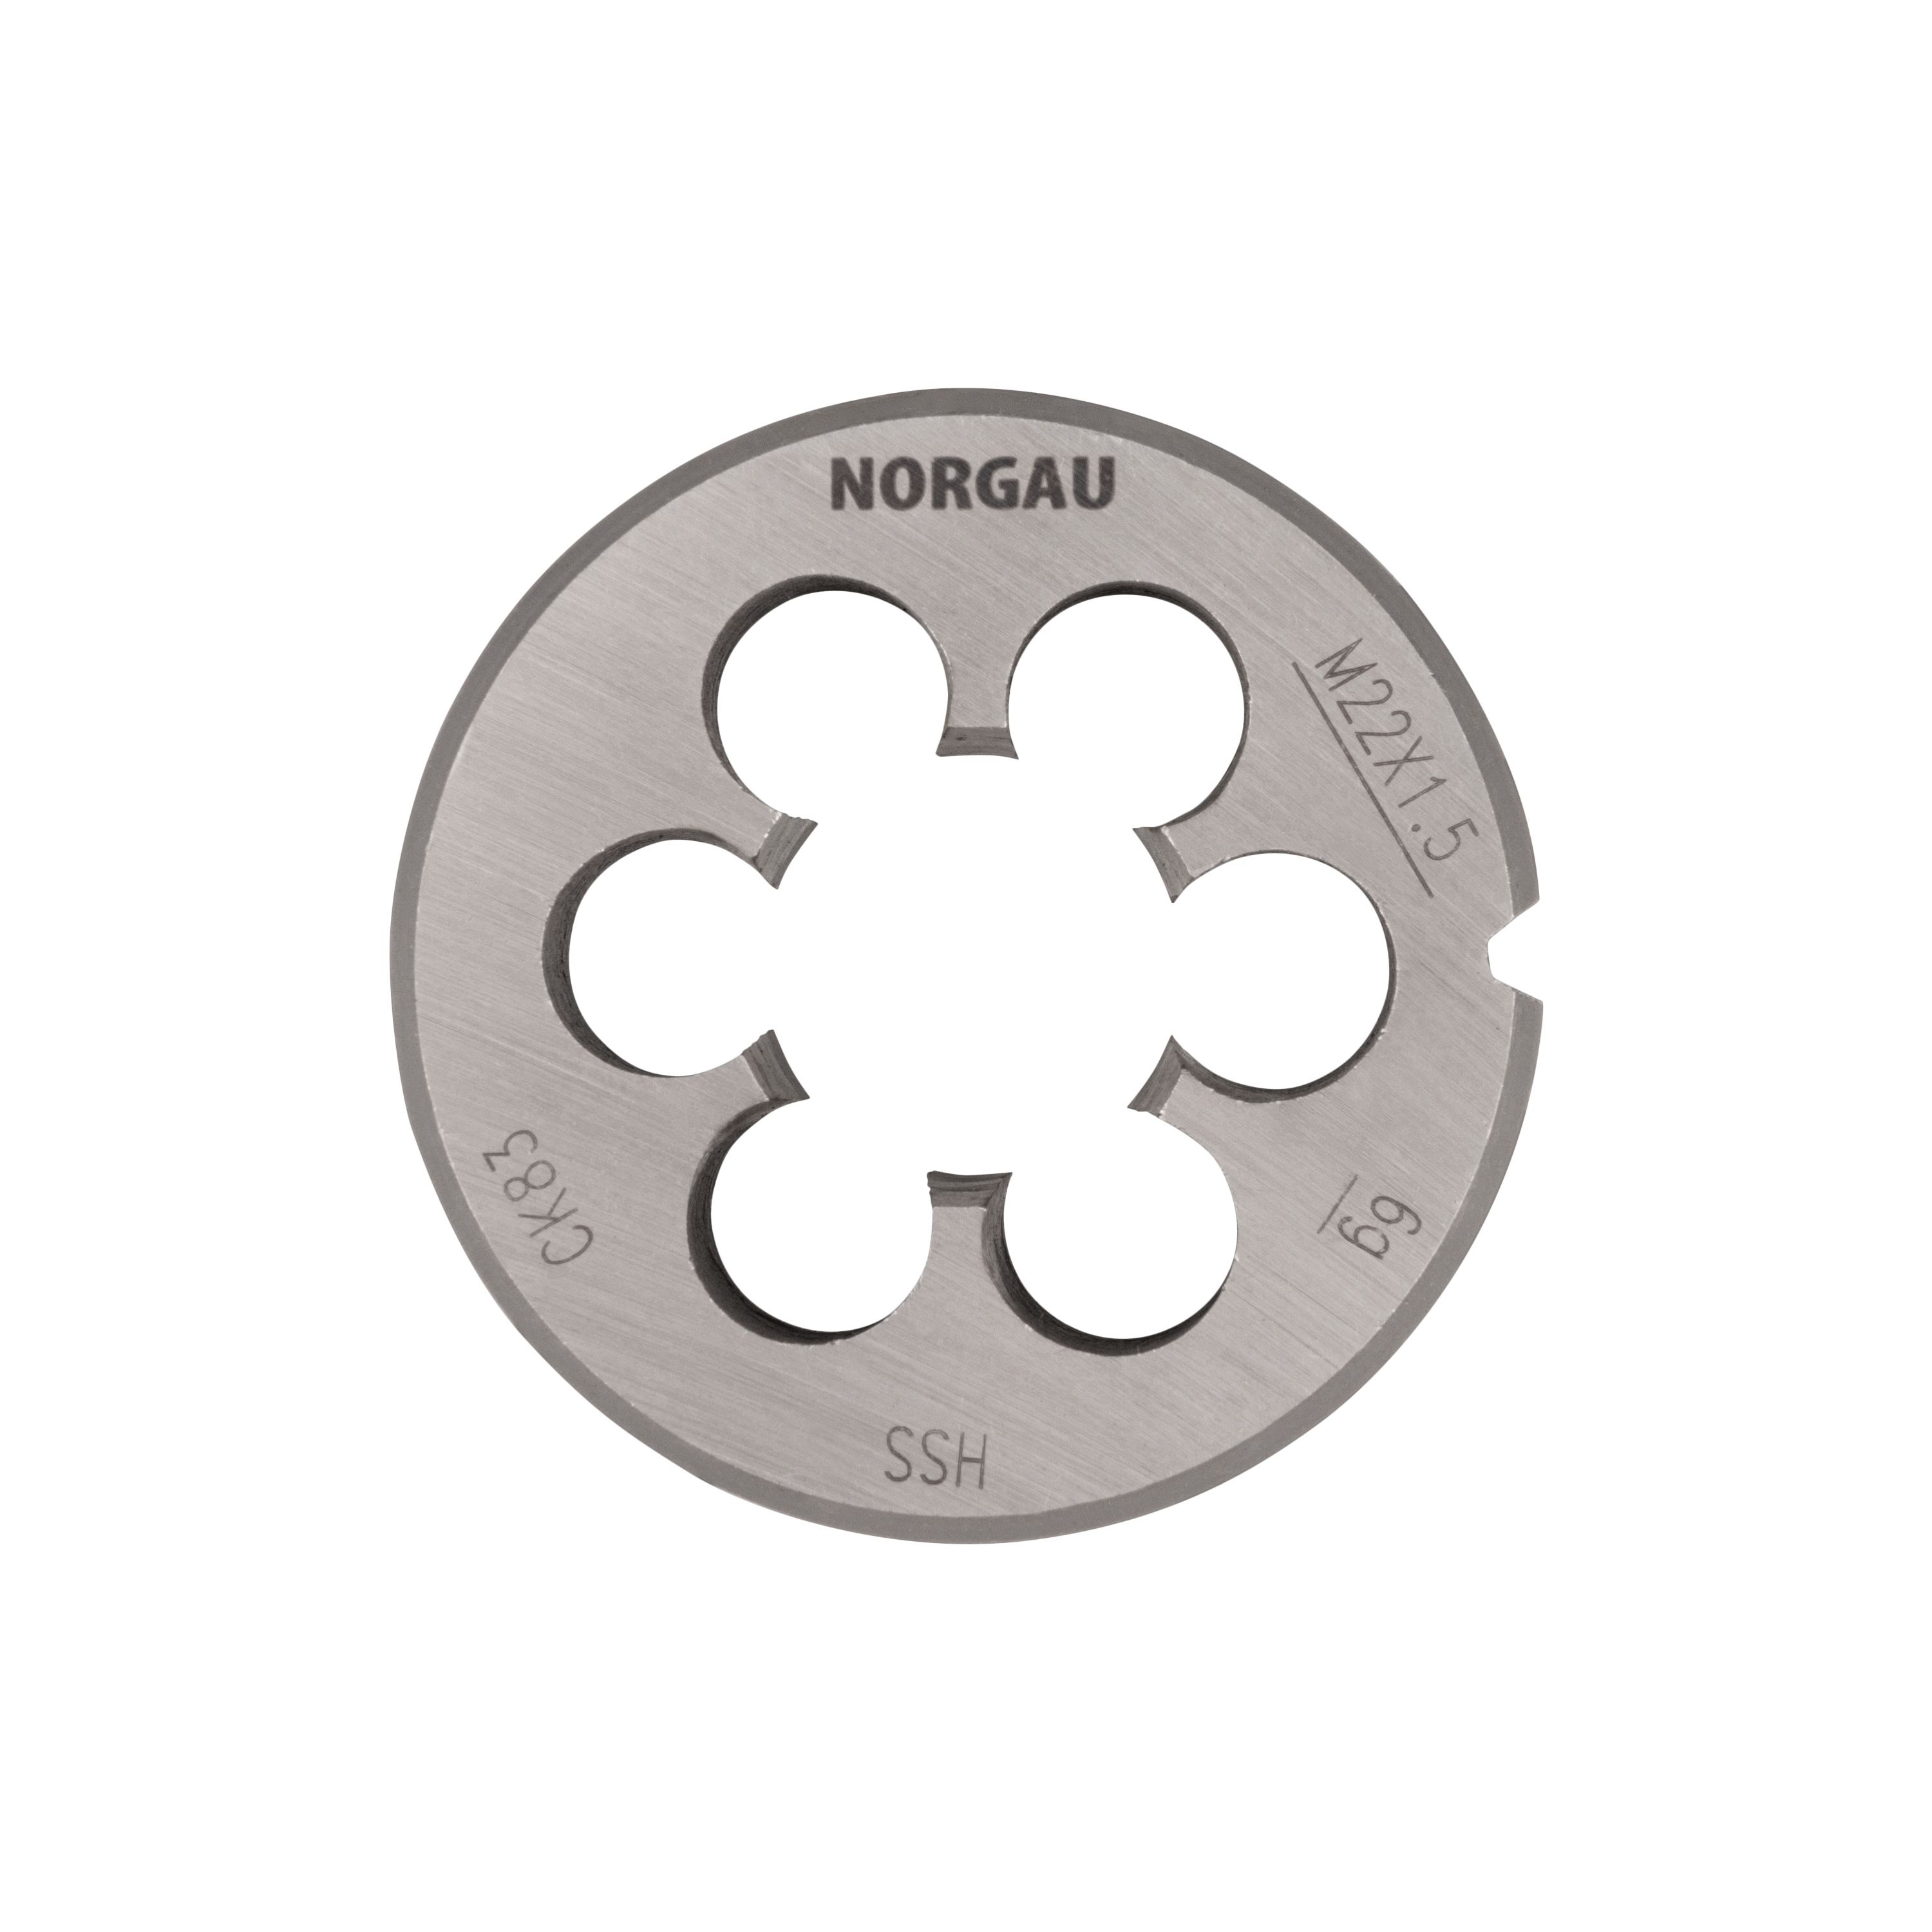 Плашка NORGAU Industrial MF22x2х55 мм, метрическая, угол 60°, по DIN223, HSS плашка м12х1 75 мм norgau industrial метрическая угол 60° по din223 hss е vap